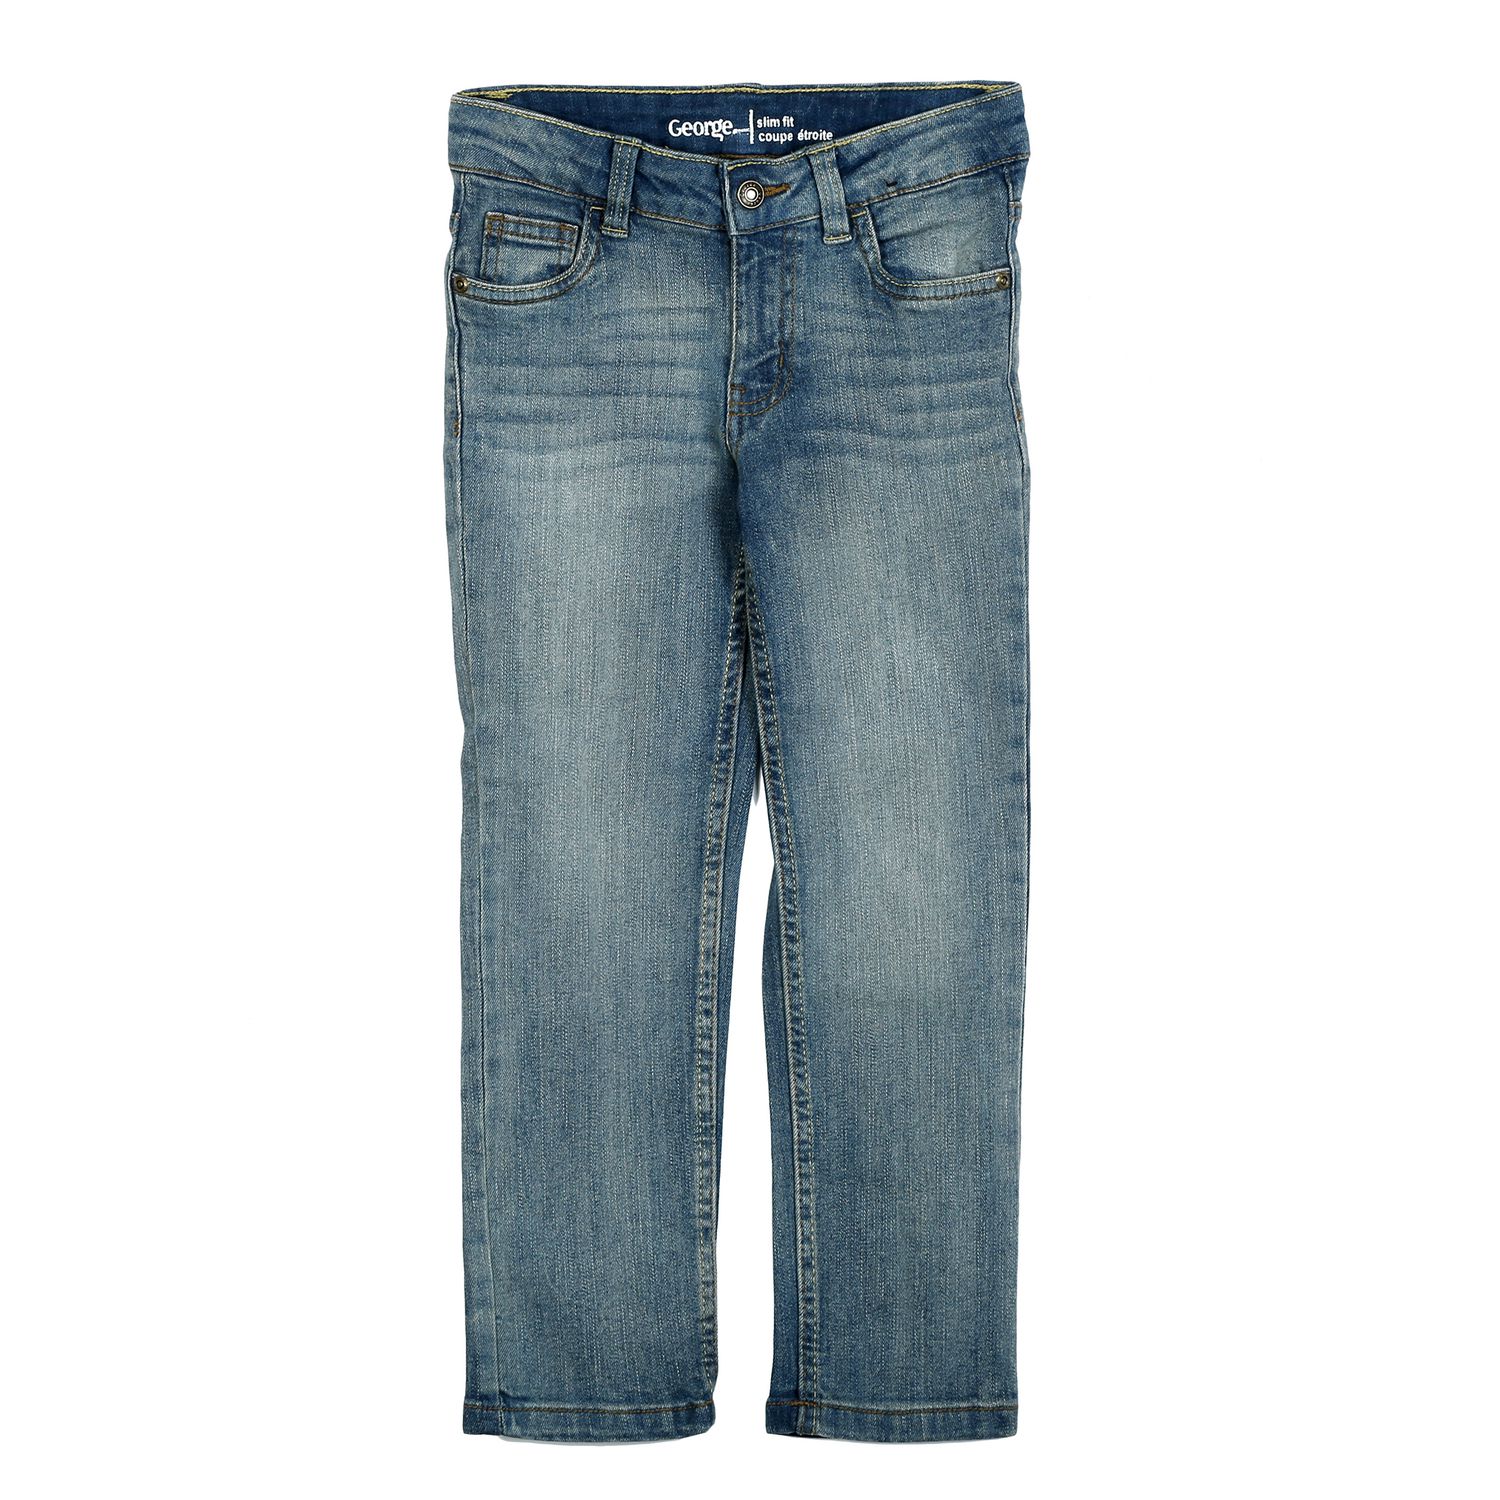 George Indigo Blue Floral Skinny Denim Jeans Age 5 6 7 8 10 12 14 16 NEW SALE!